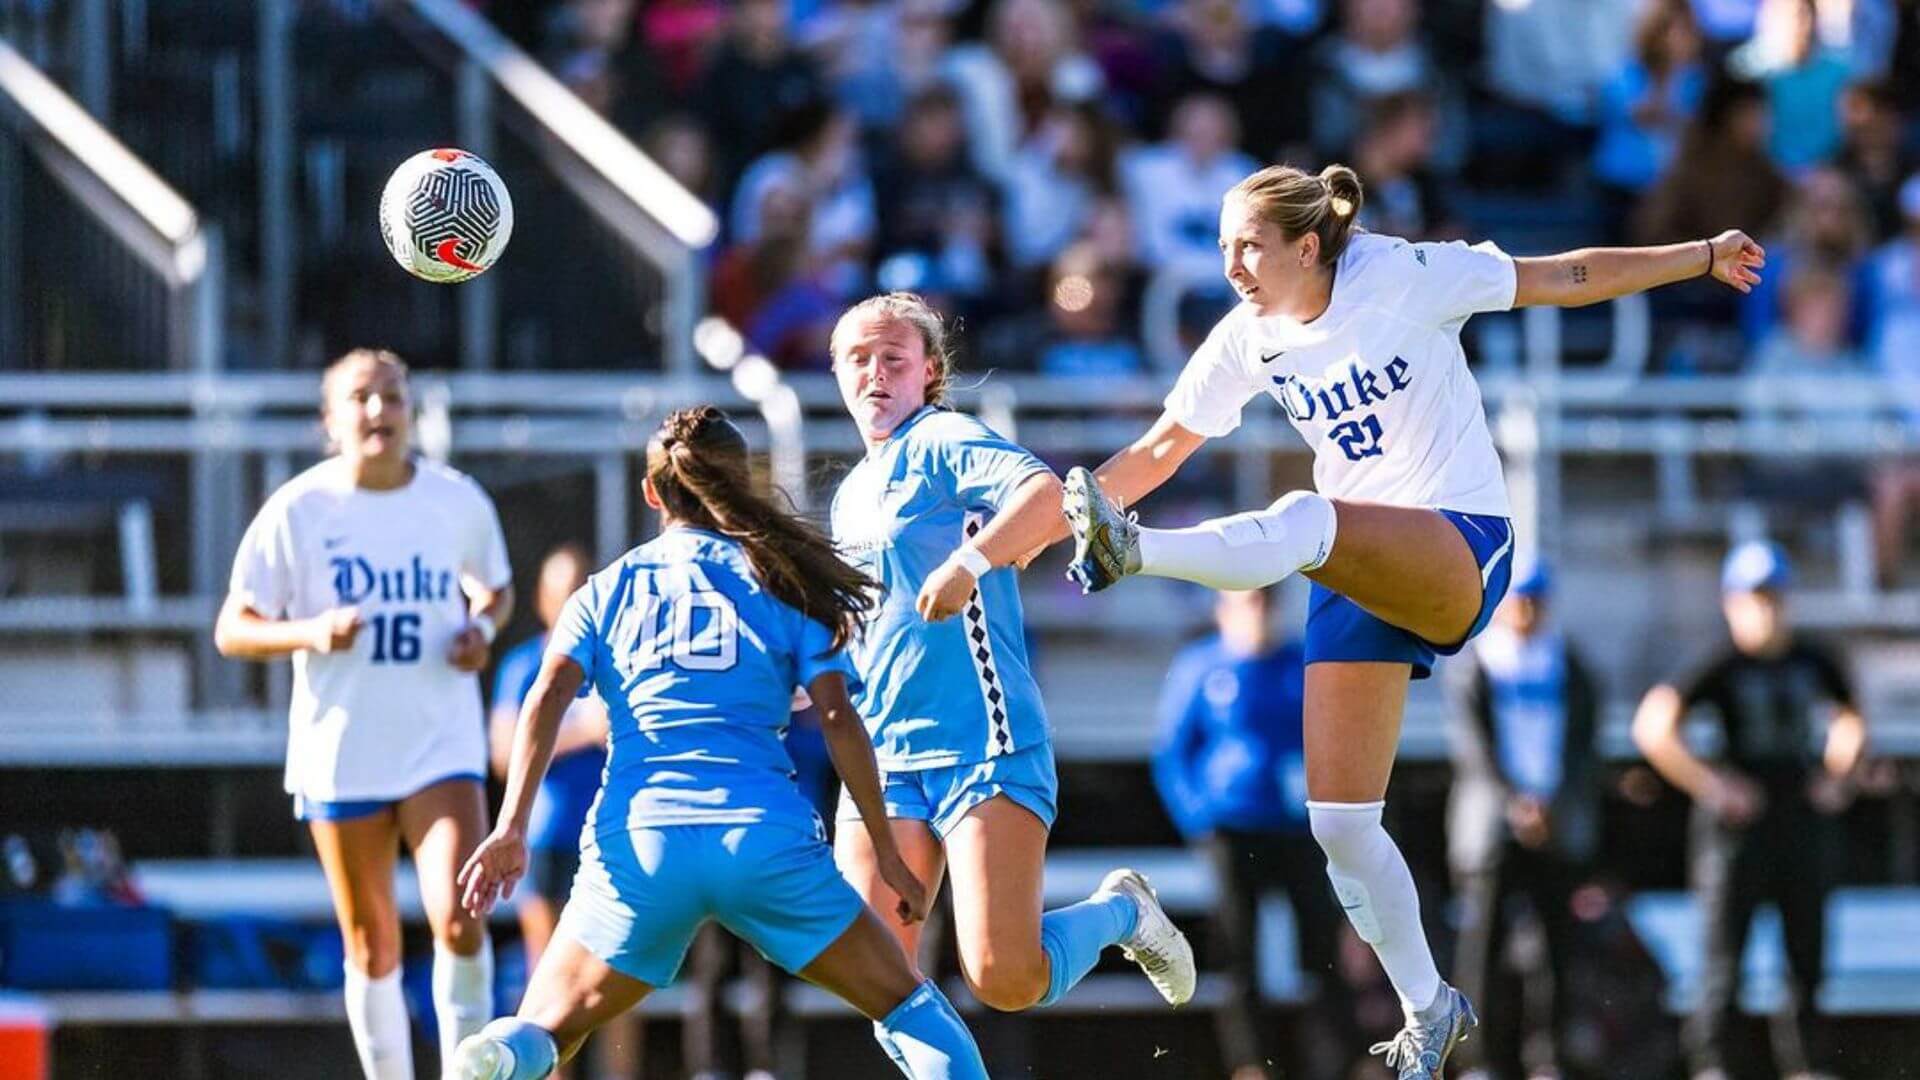 Duke vs. UNC, one of our 8 NCAA women's soccer rivalries